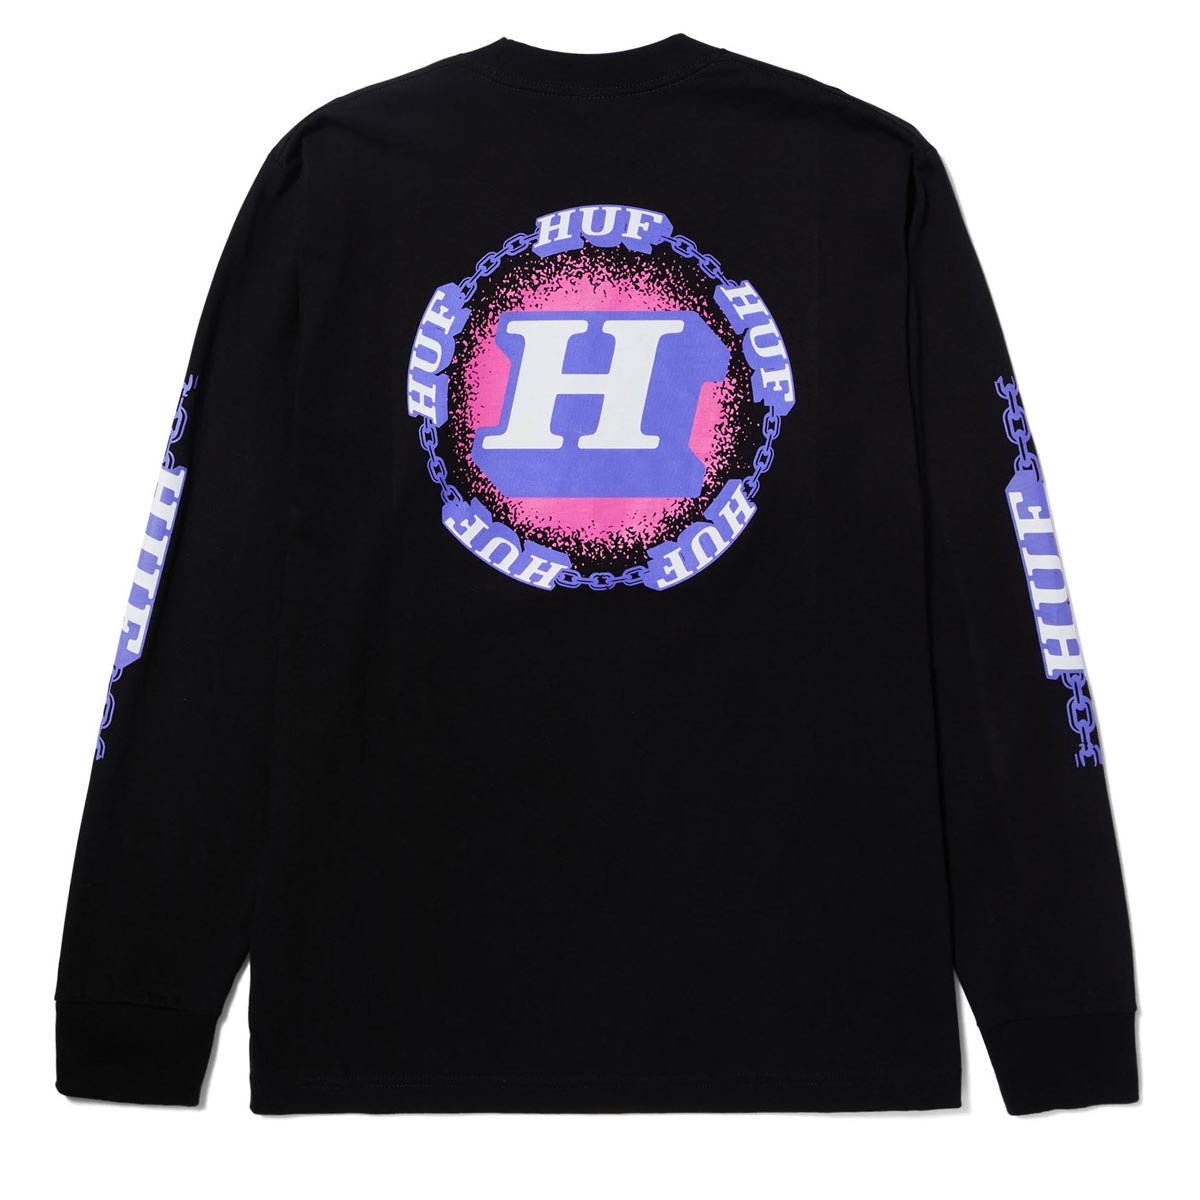 HUF Dependable Long Sleeve T-Shirt - Black image 2